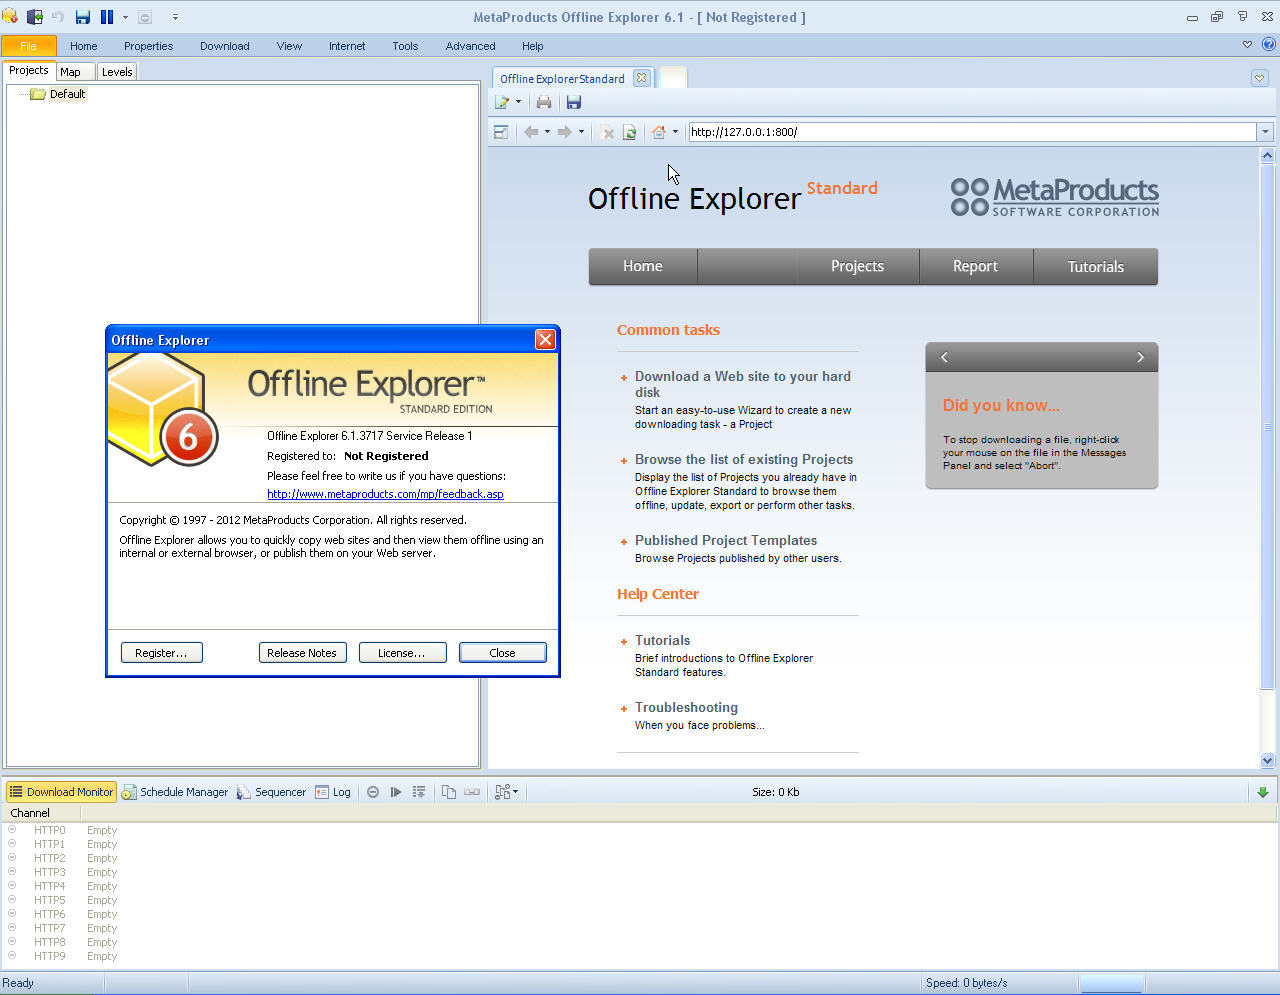 instal the new MetaProducts Offline Explorer Enterprise 8.5.0.4972